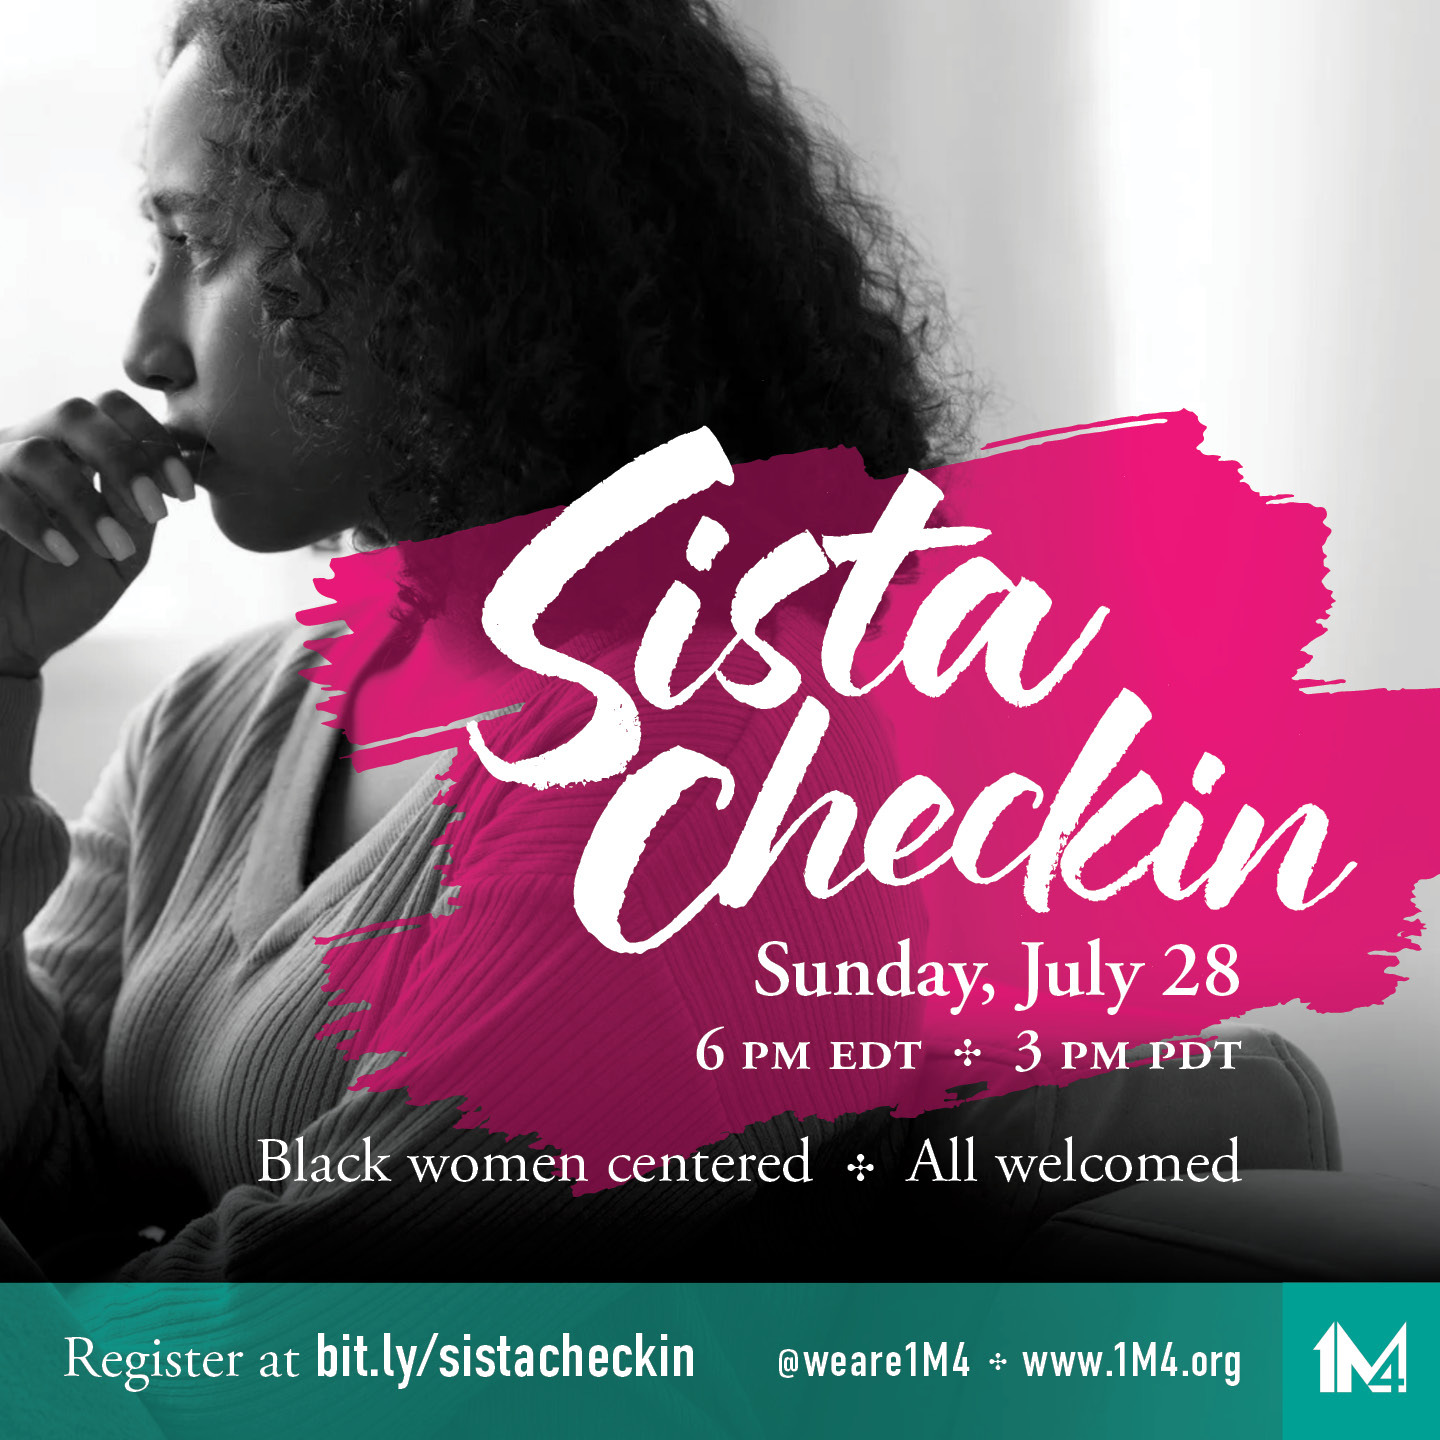 Sista CheckIn - Monday July 29th at 6pm EST - https://bit.ly/sistacheckin